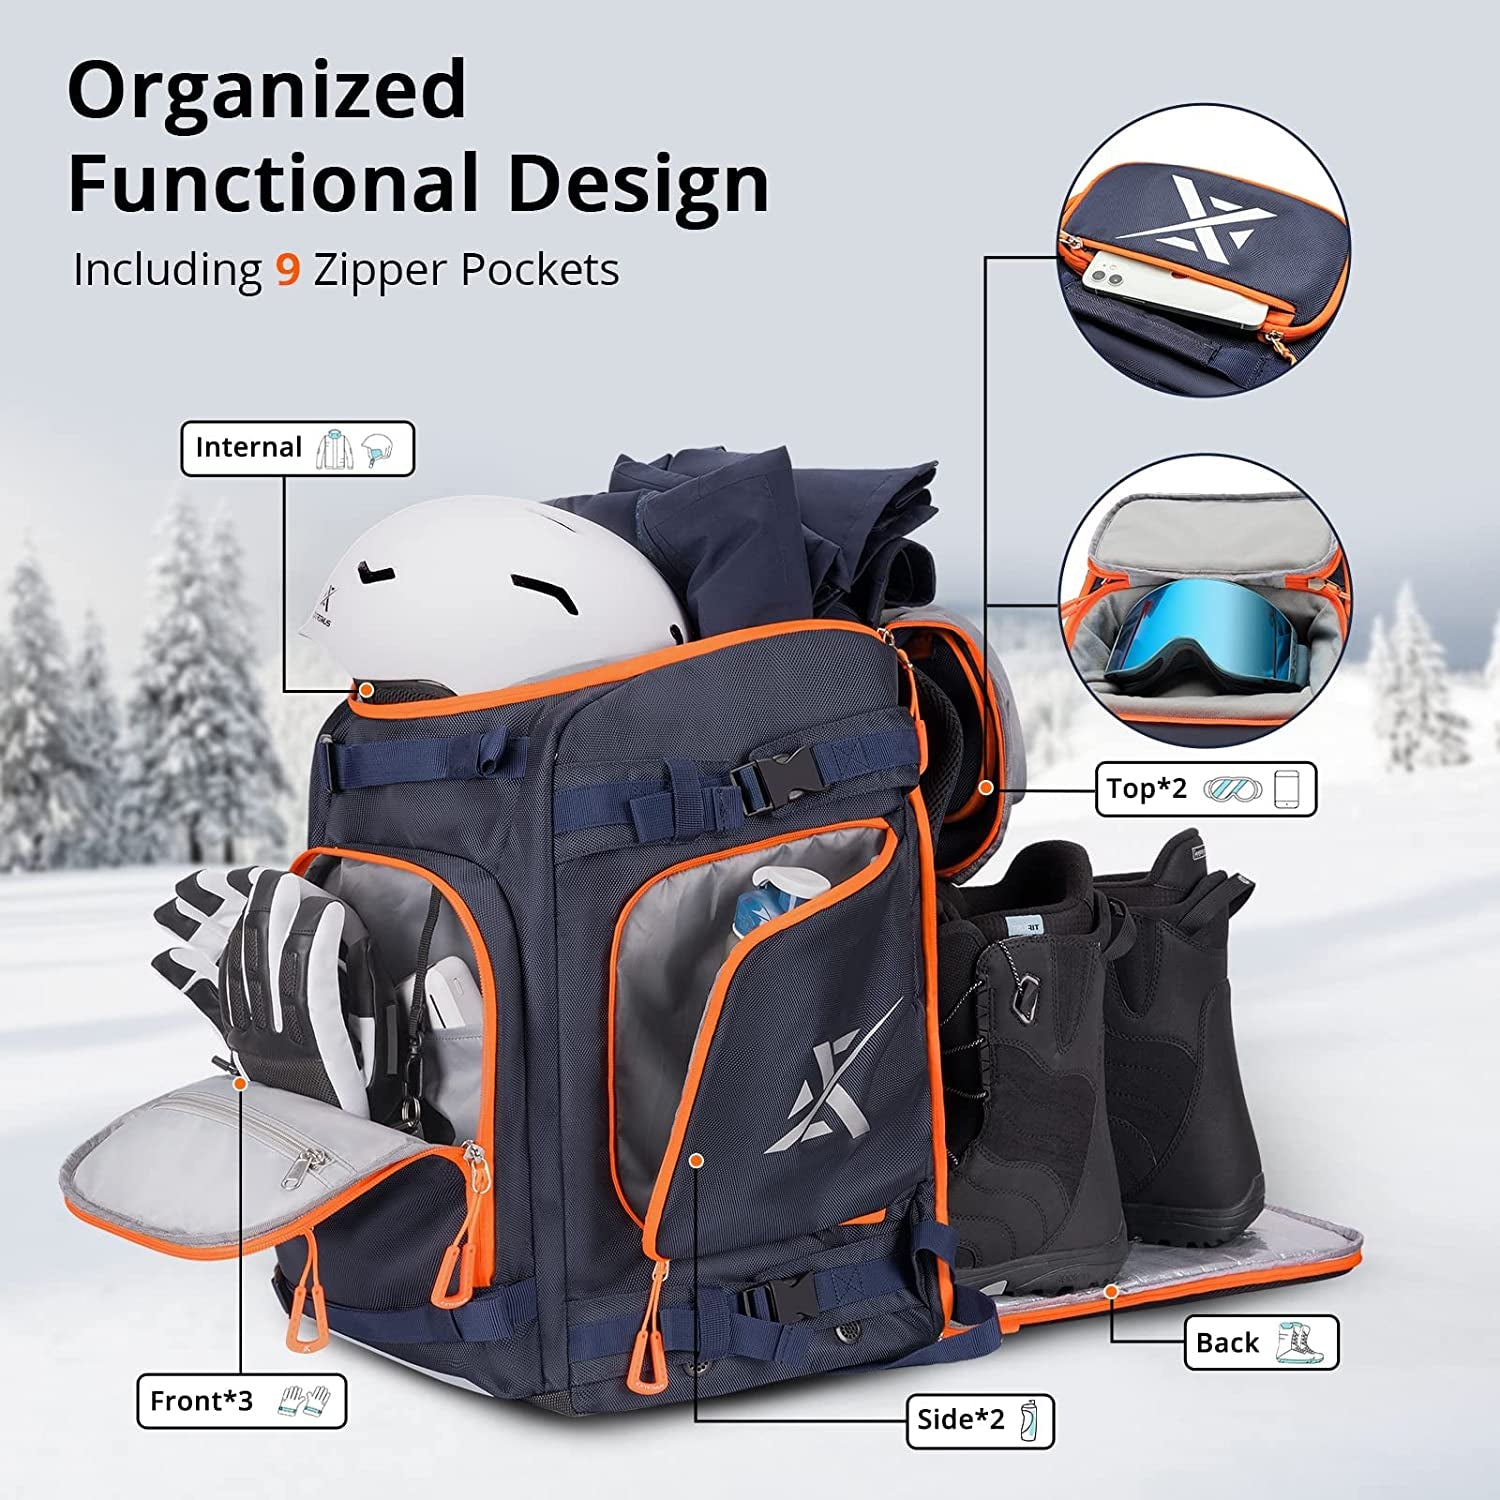 Extremus Ski Boot Bag, 70L Waterproof Snowboard Backpack,Large Capacity Ski Travel Bag Luggage for Ski Boots, Ski Helmet, Goggles, Gloves, Apparel & Skiing Gear Accessories